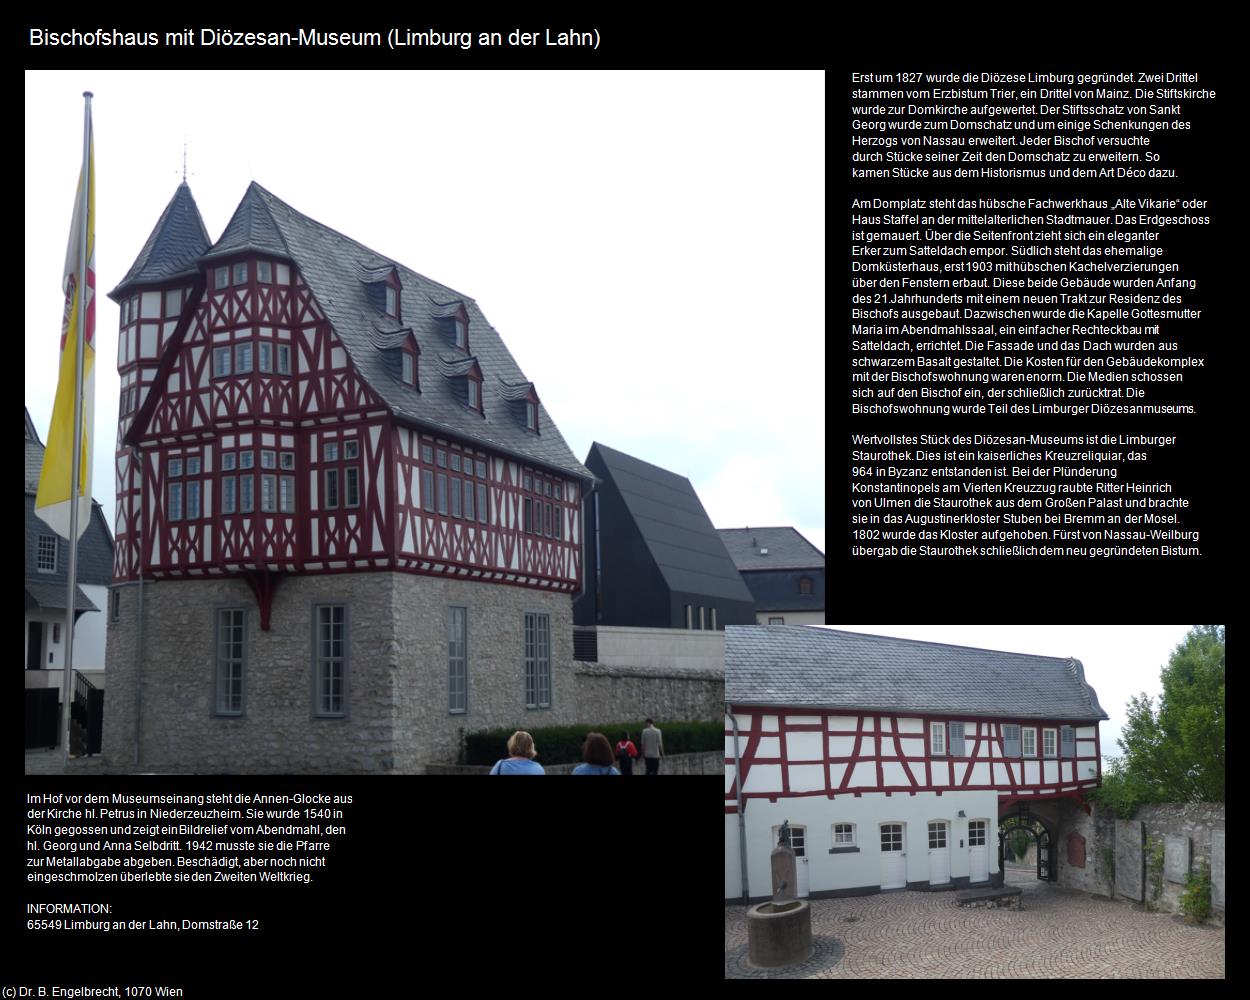 Bischofshaus mit Diözesan-Museum (Limburg an der Lahn) in Kulturatlas-HESSEN